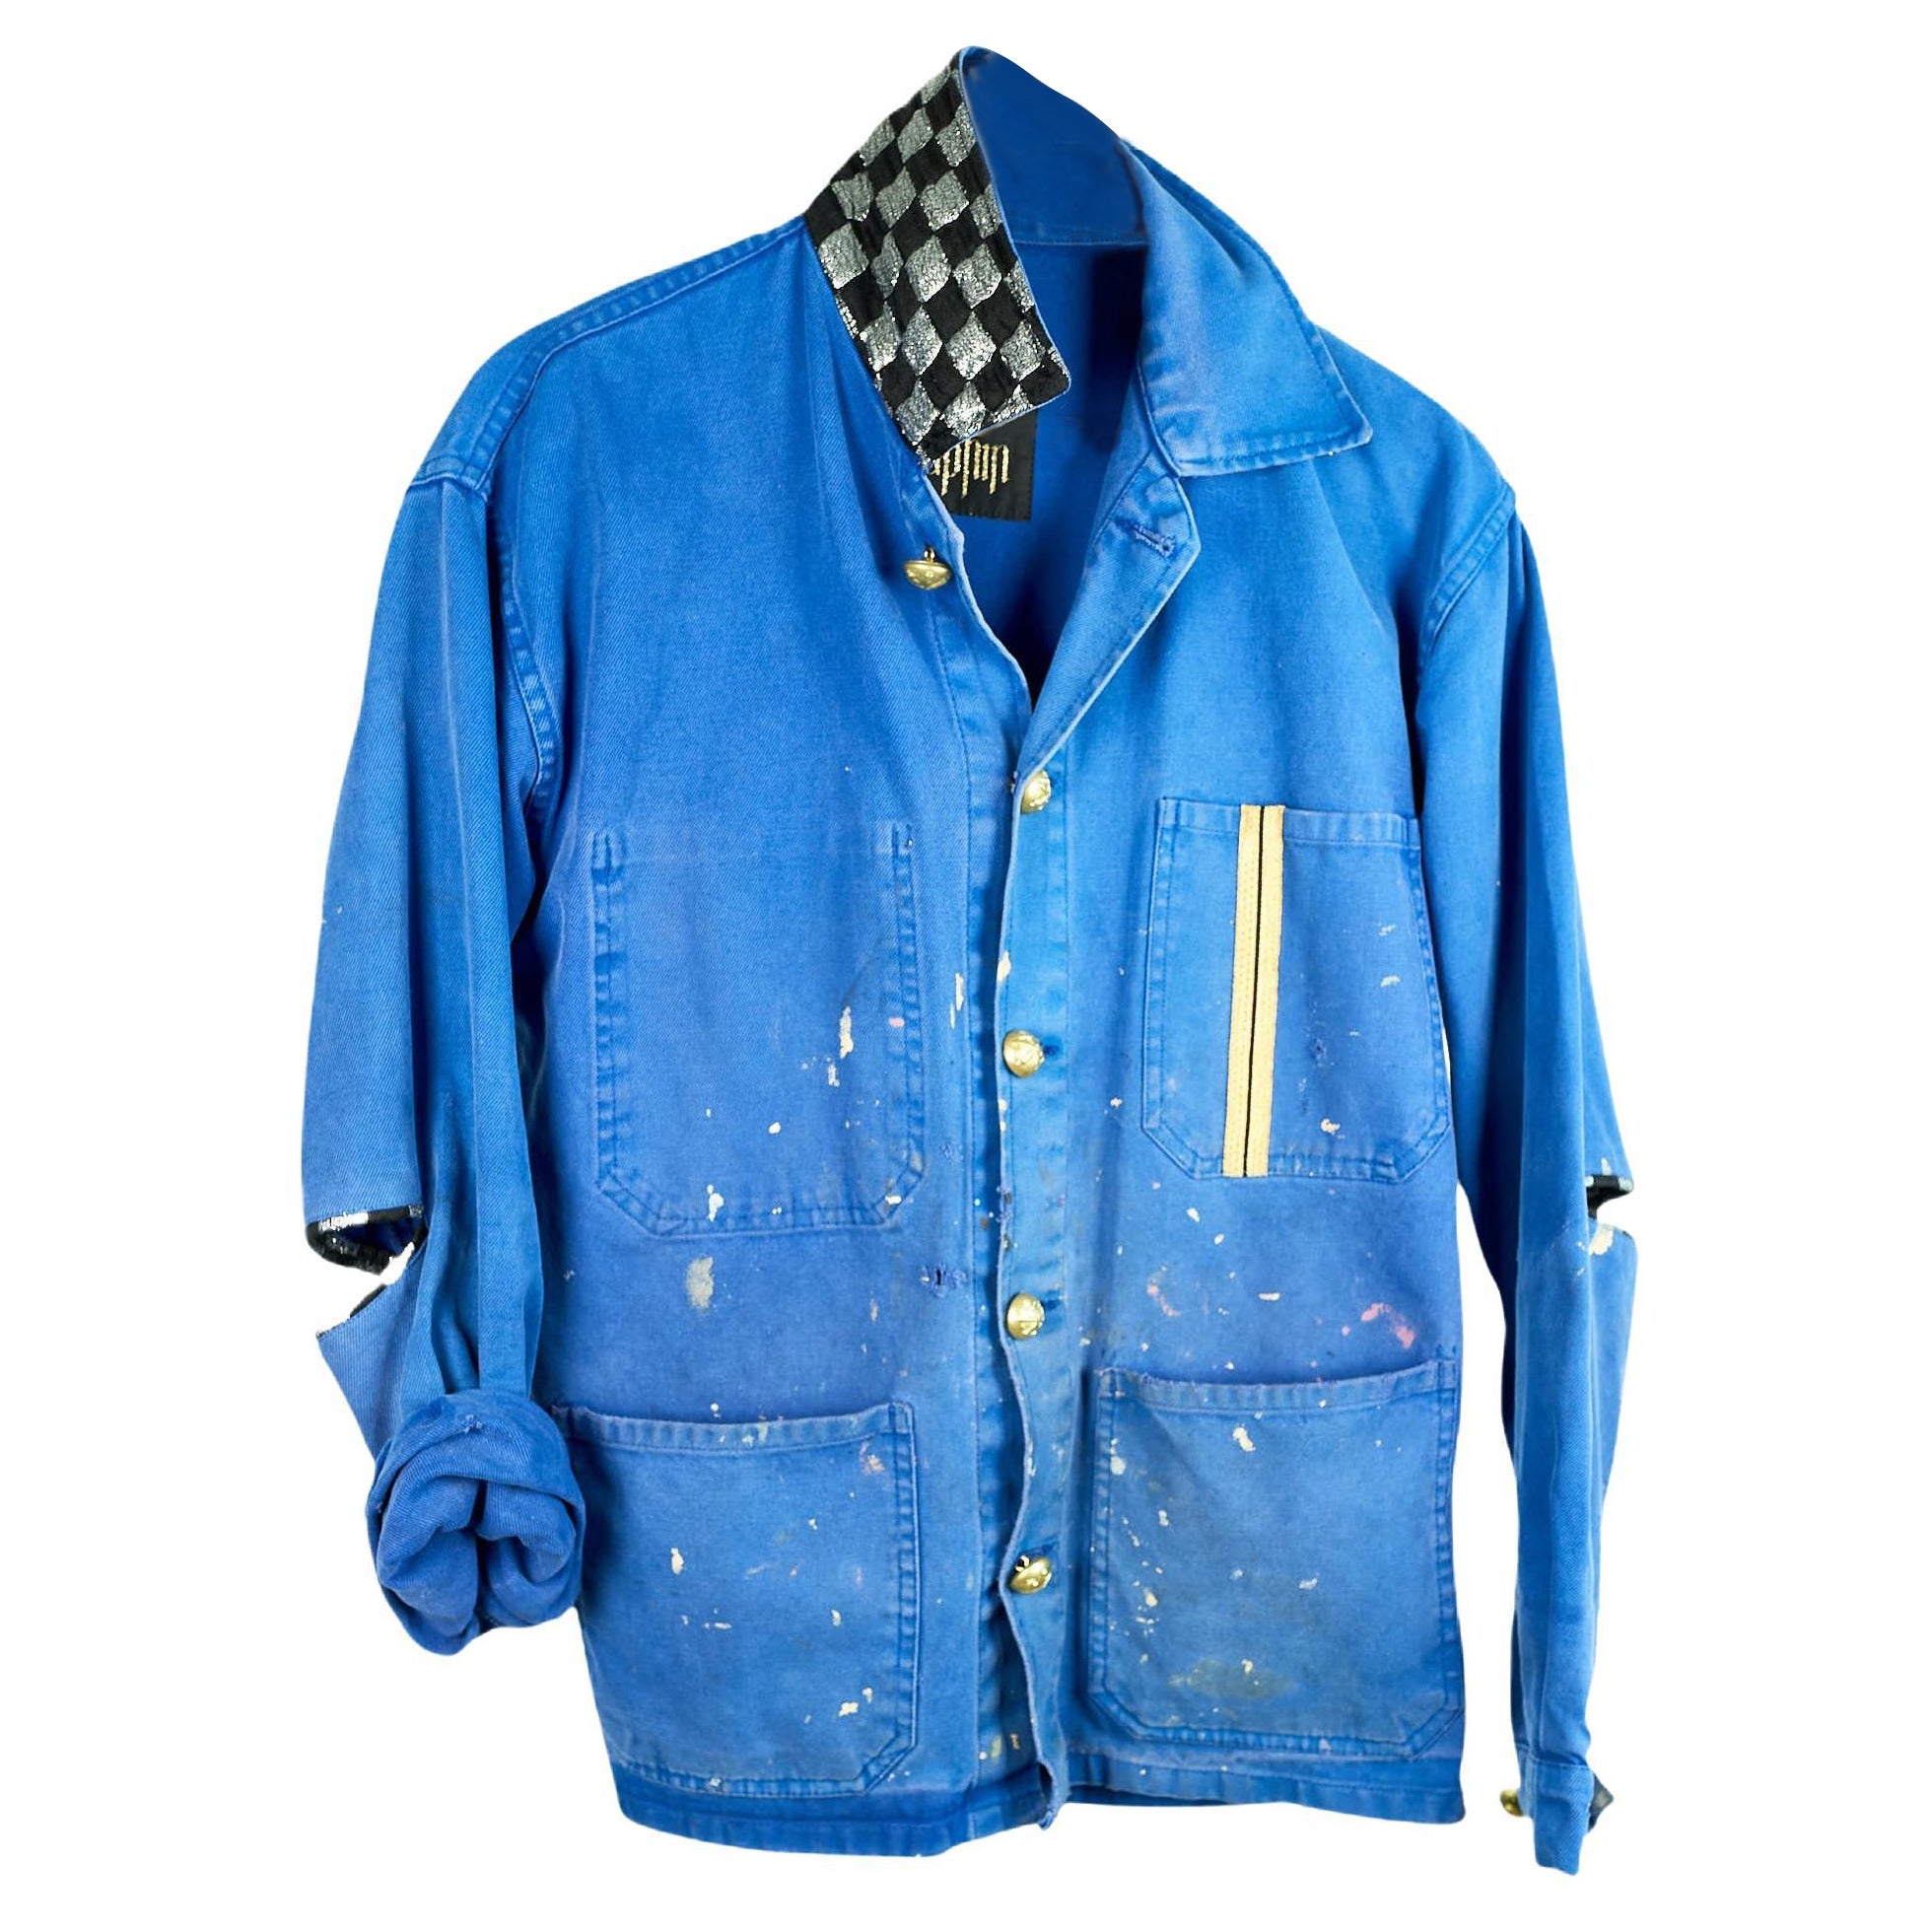 Designer Jacket Distressed Original French Blue Work Wear J Dauphin Small